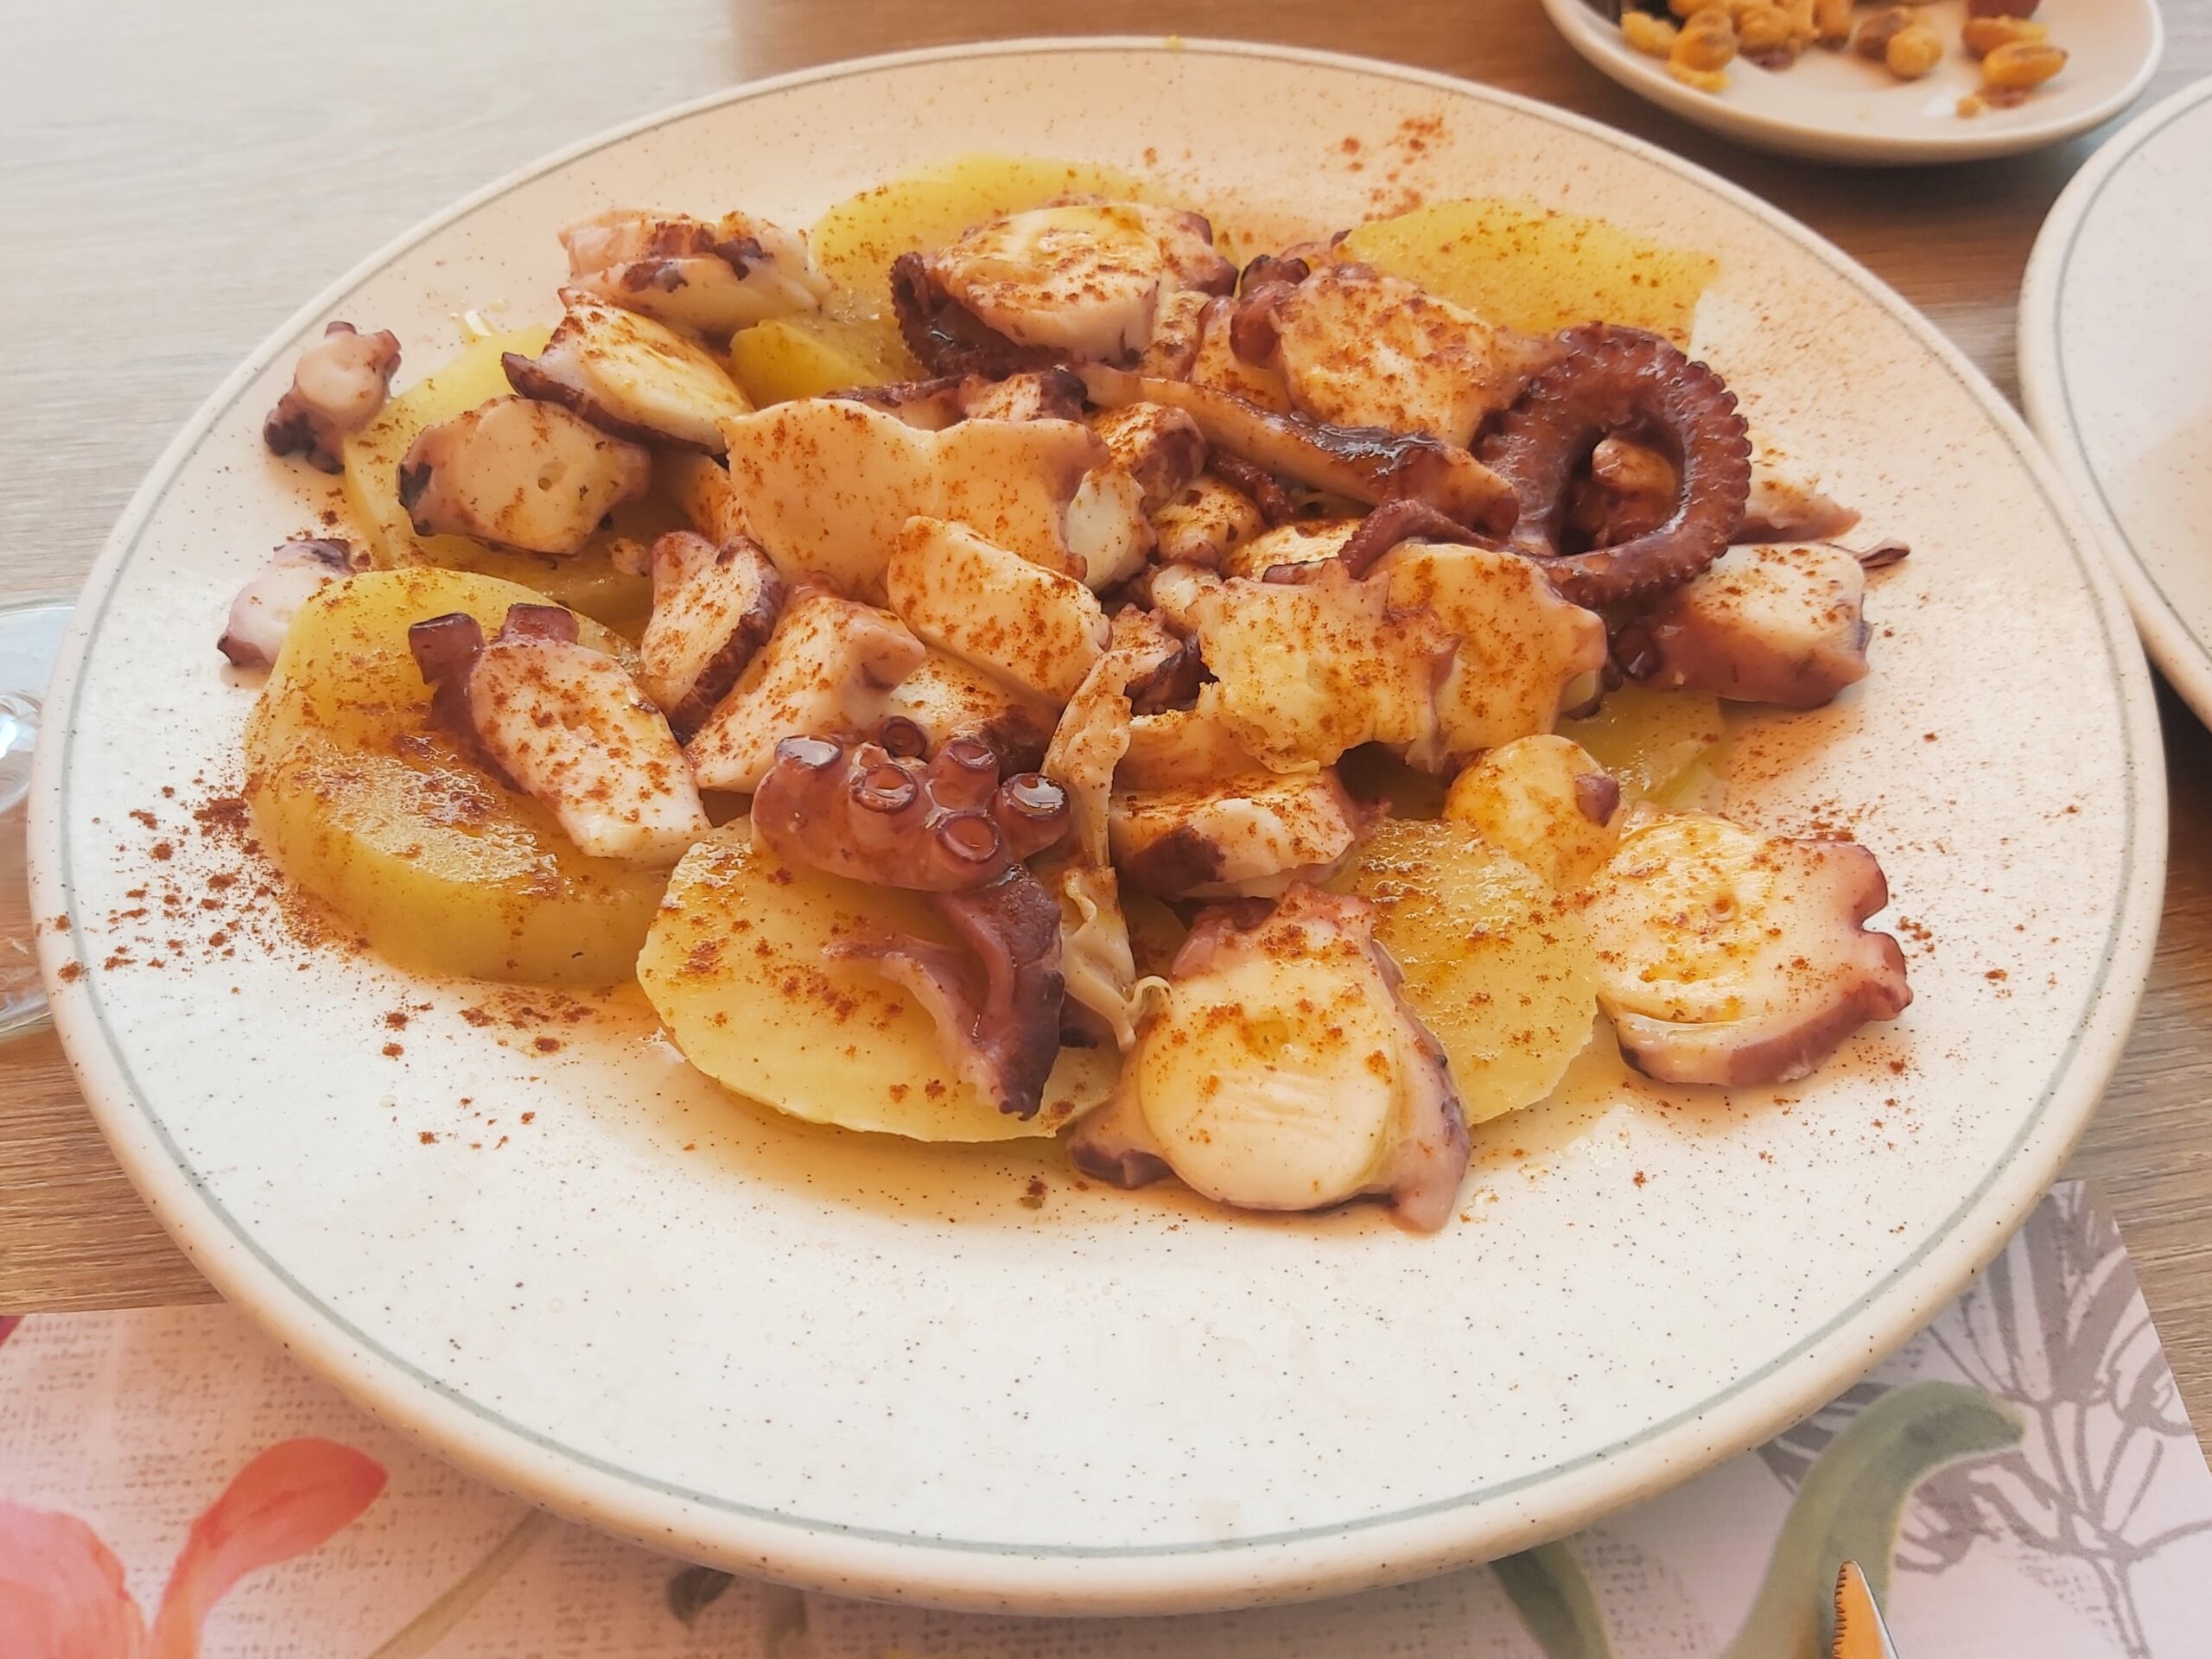 Octopus dish from Il Pomodoro in Lloret de Mar, Spain